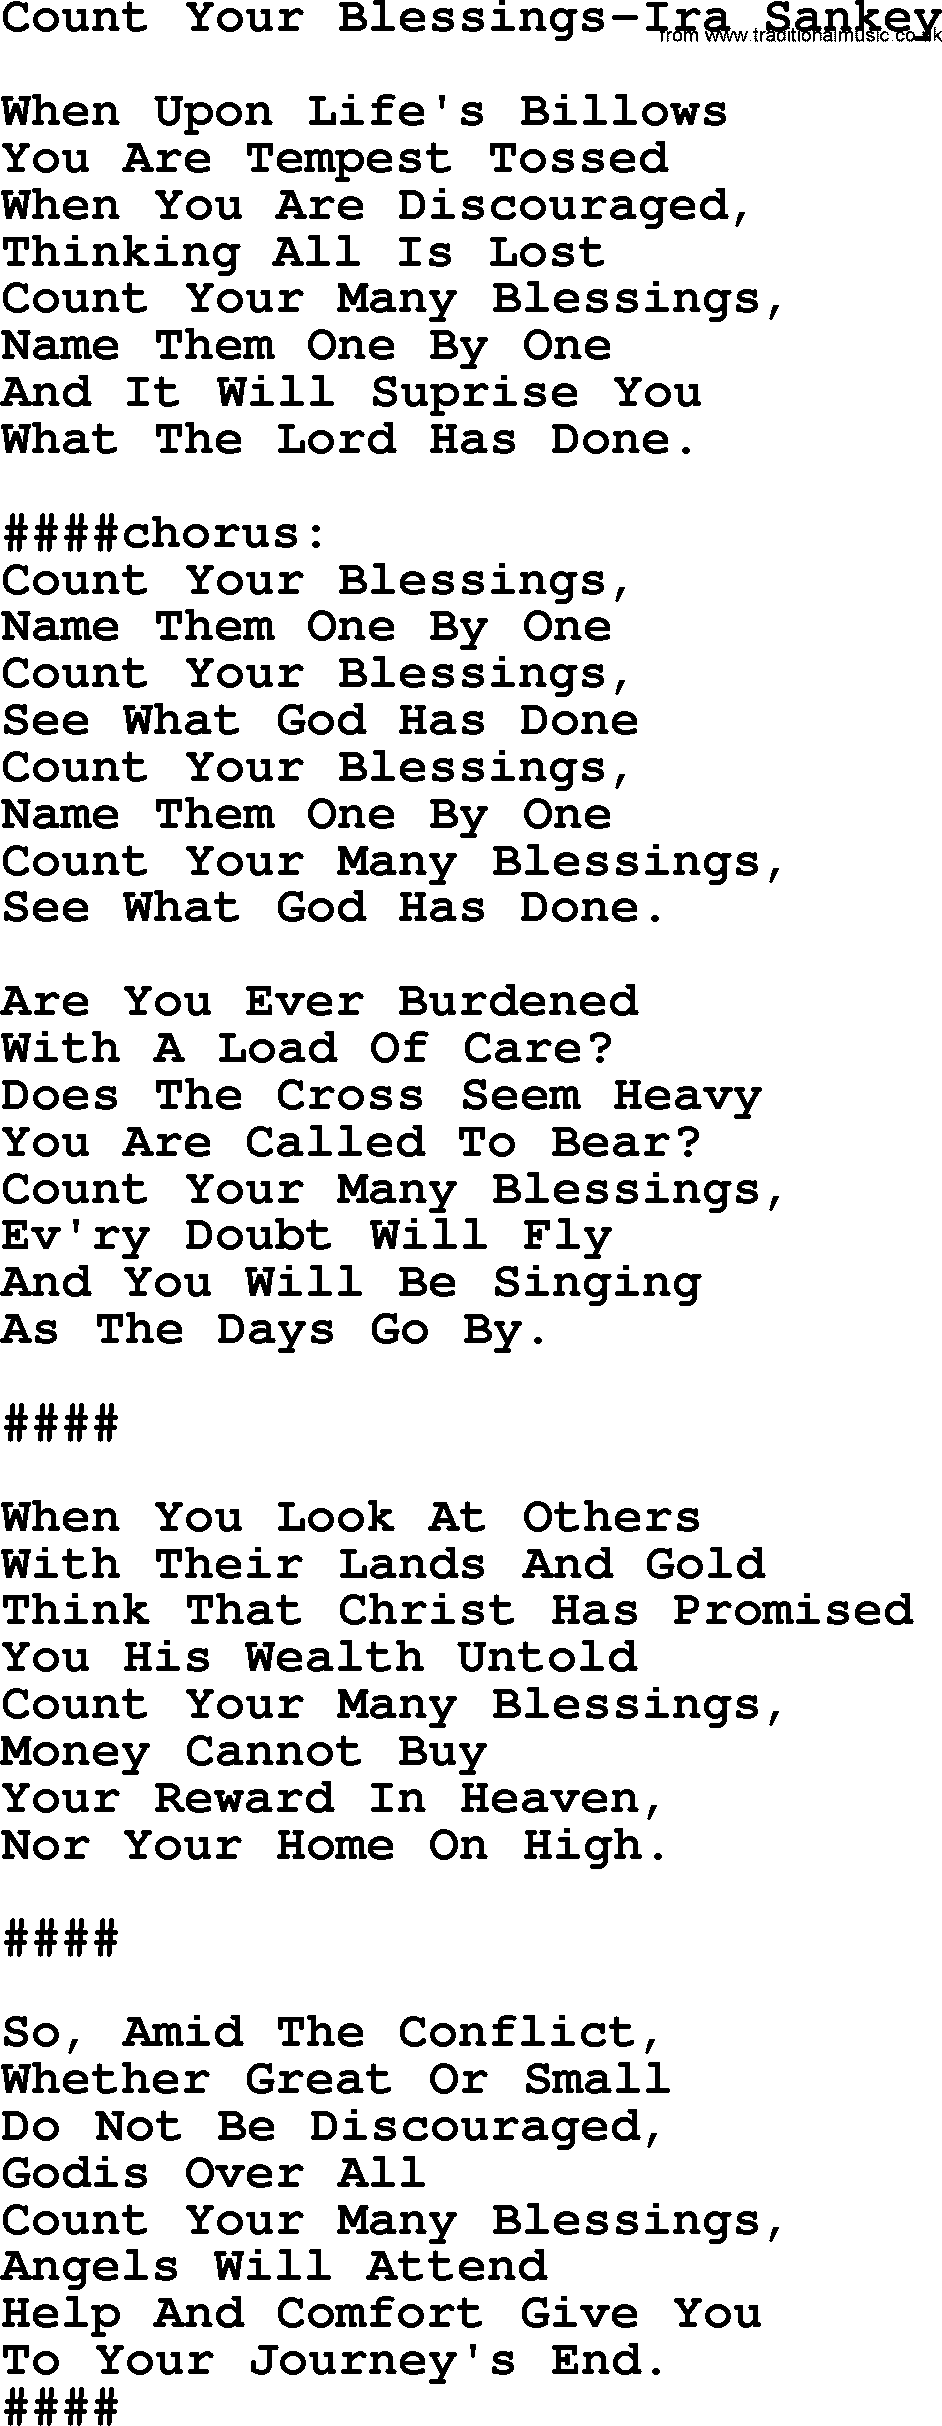 Ira Sankey hymn: Count Your Blessings-Ira Sankey, lyrics